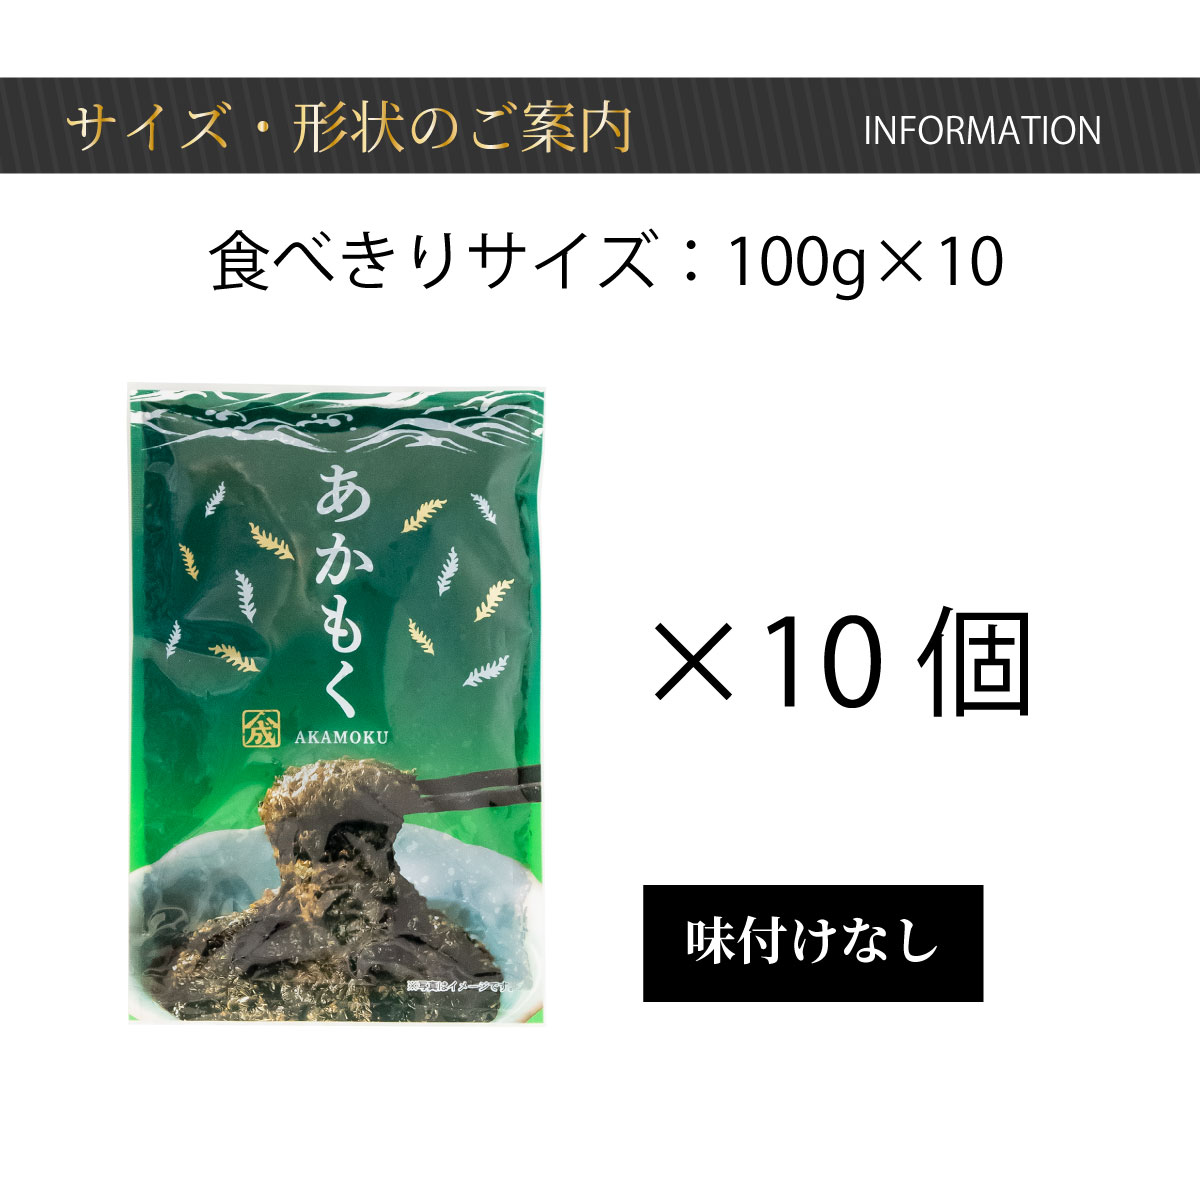 a...[100g×10 шт ] водоросли ...a утка k серебристый ba saw nagamo фукоидан super водоросли super капот 